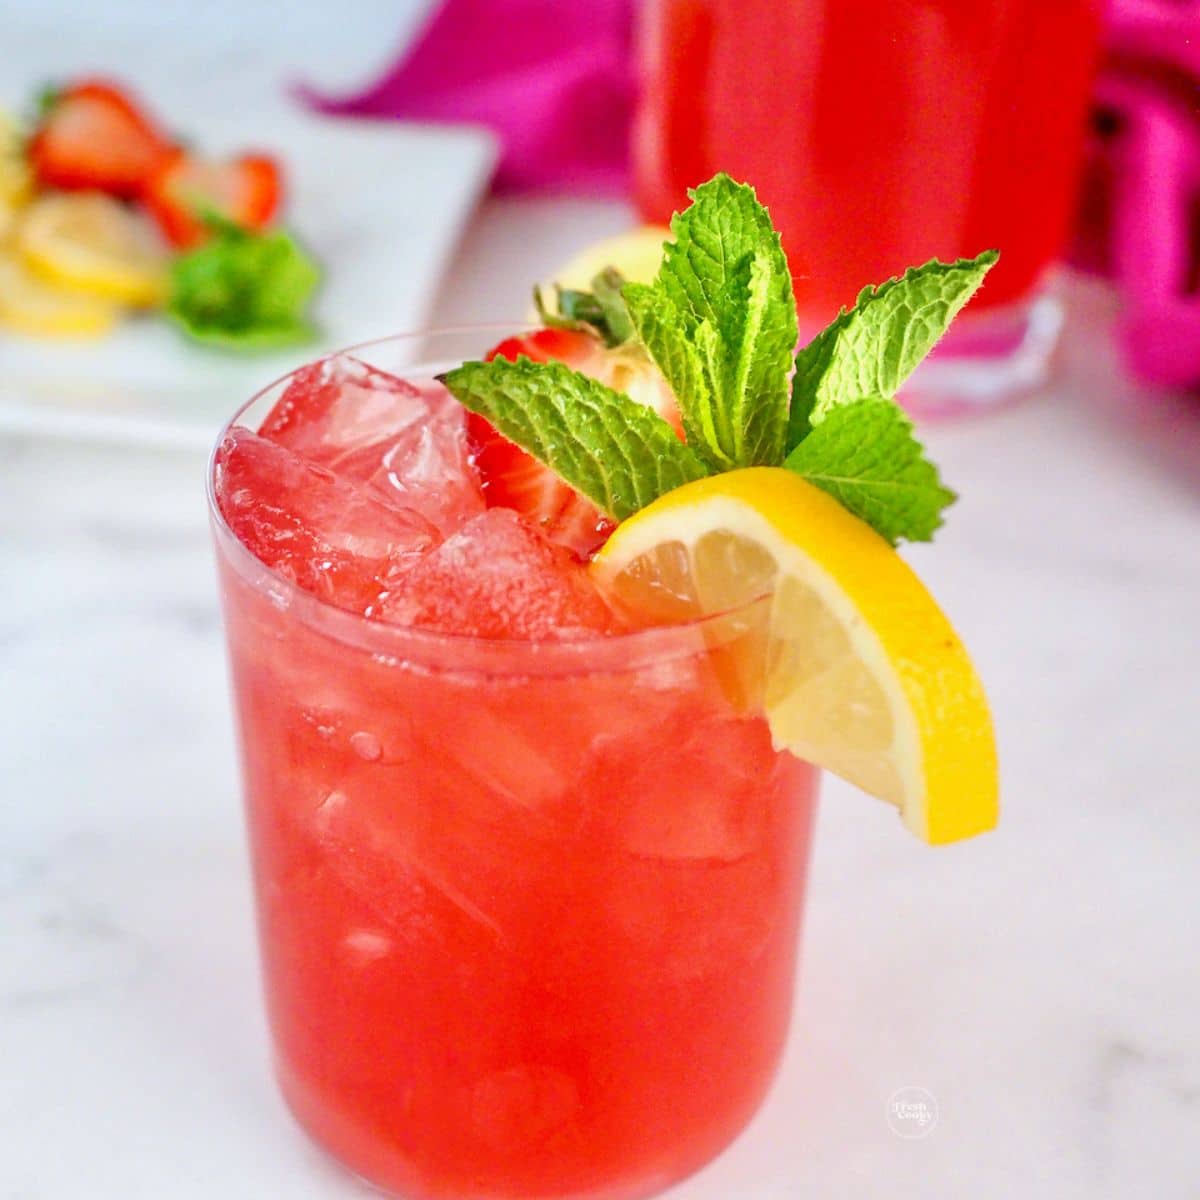 Pink lemonade vodka cocktail garnished with mint, lemon and a strawberry.